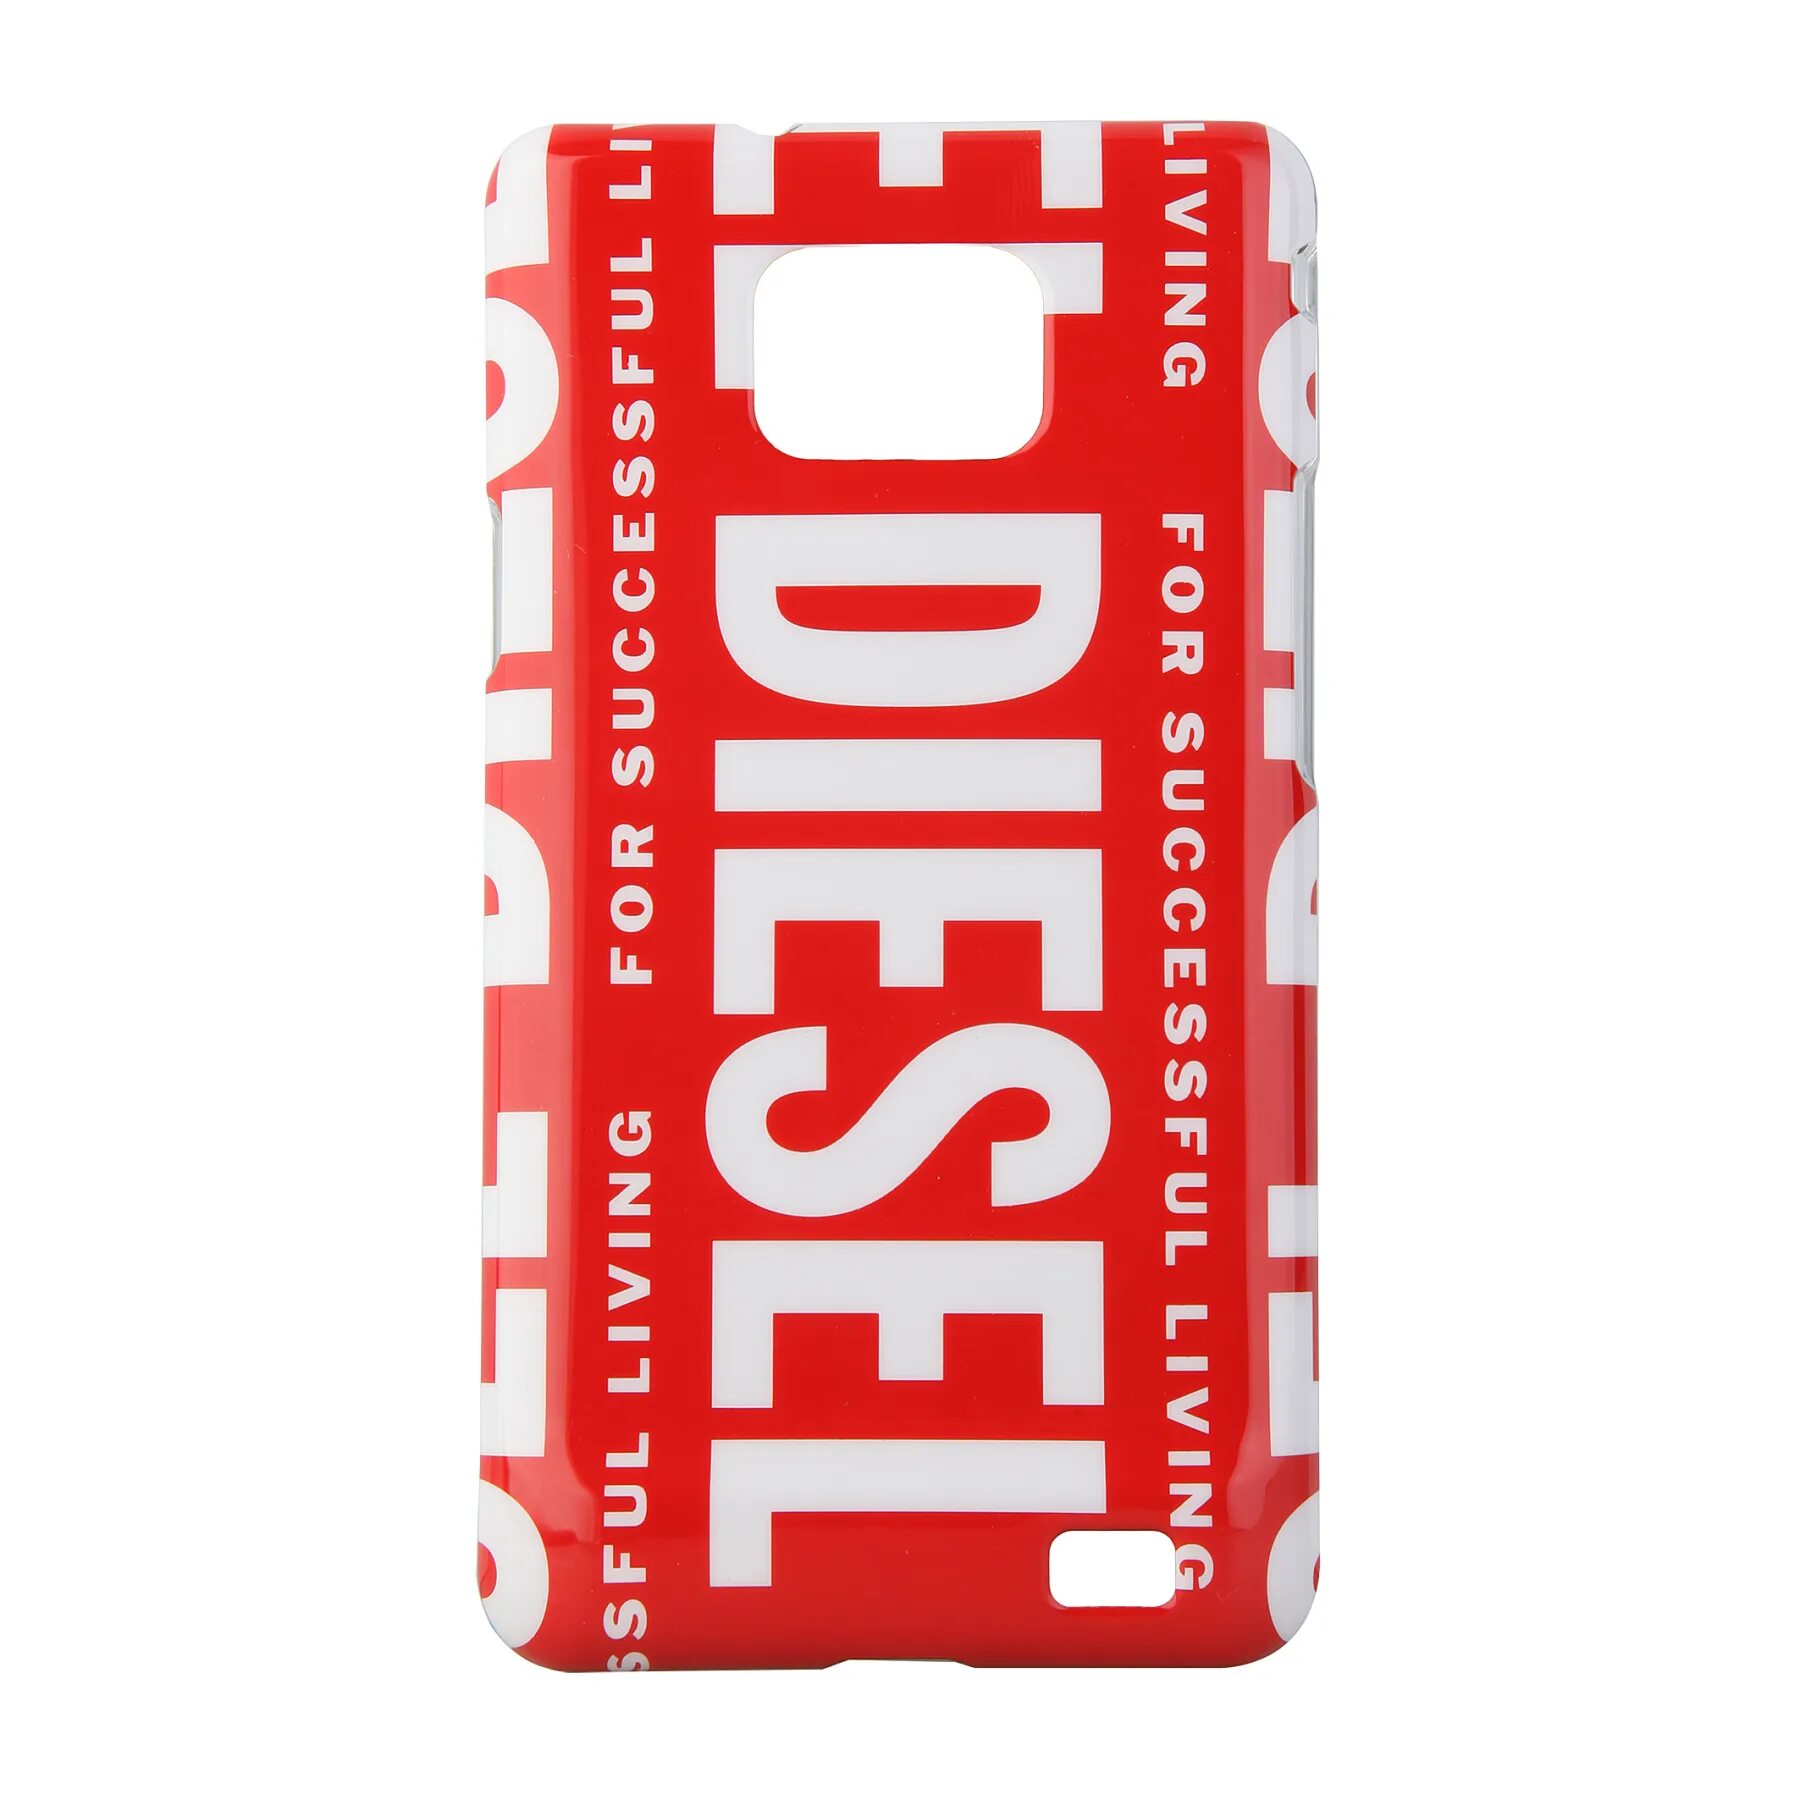 Чехол Diesel. Обложки бренда Diesel. Футляр Diesel оригинал. Diesel лого красная.